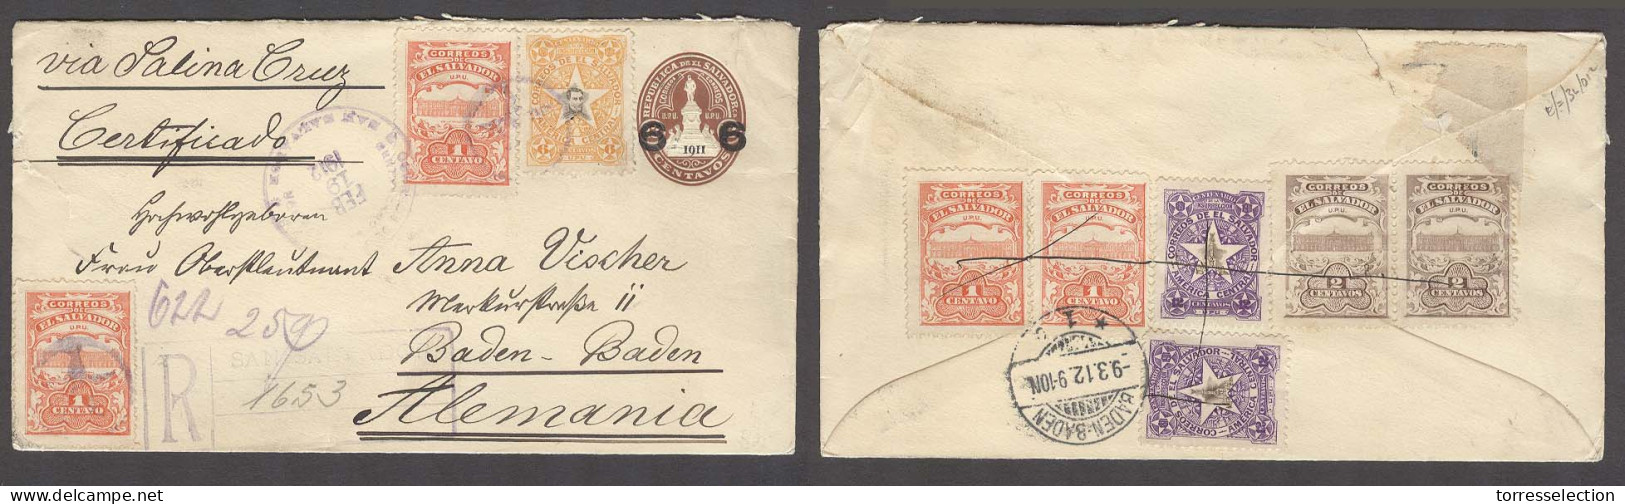 SALVADOR, EL. 1912 (19 Feb). S Salvador - Germany (9 March). Reg Multifkd 6c UPU Brown Ovtd Stat Env + 9 Adtl Stamps + A - Salvador